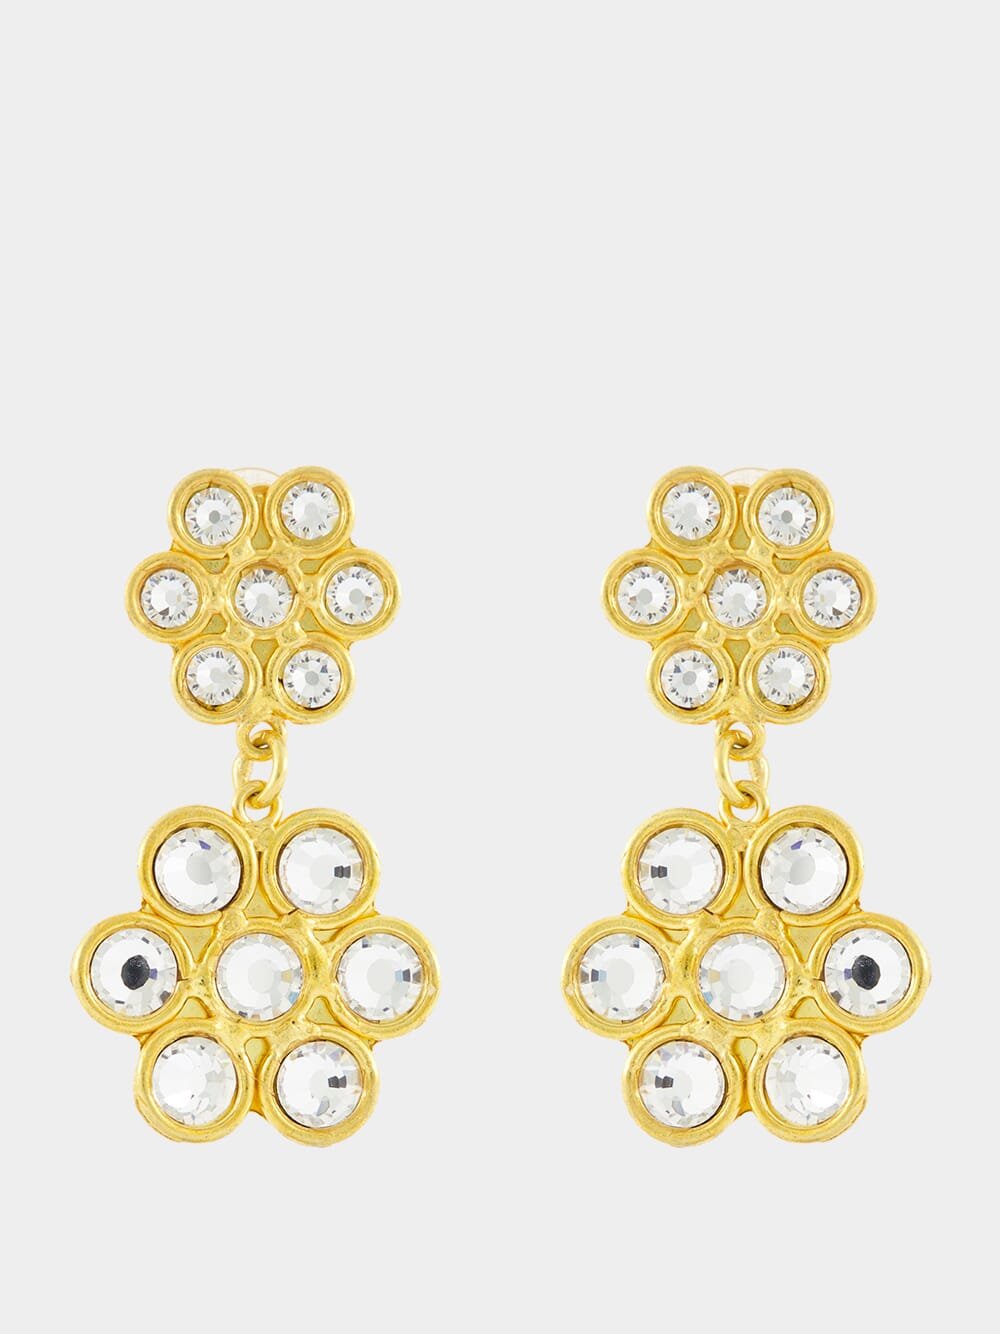 Sylvia ToledanoCrystal Blossom Earrings at Fashion Clinic